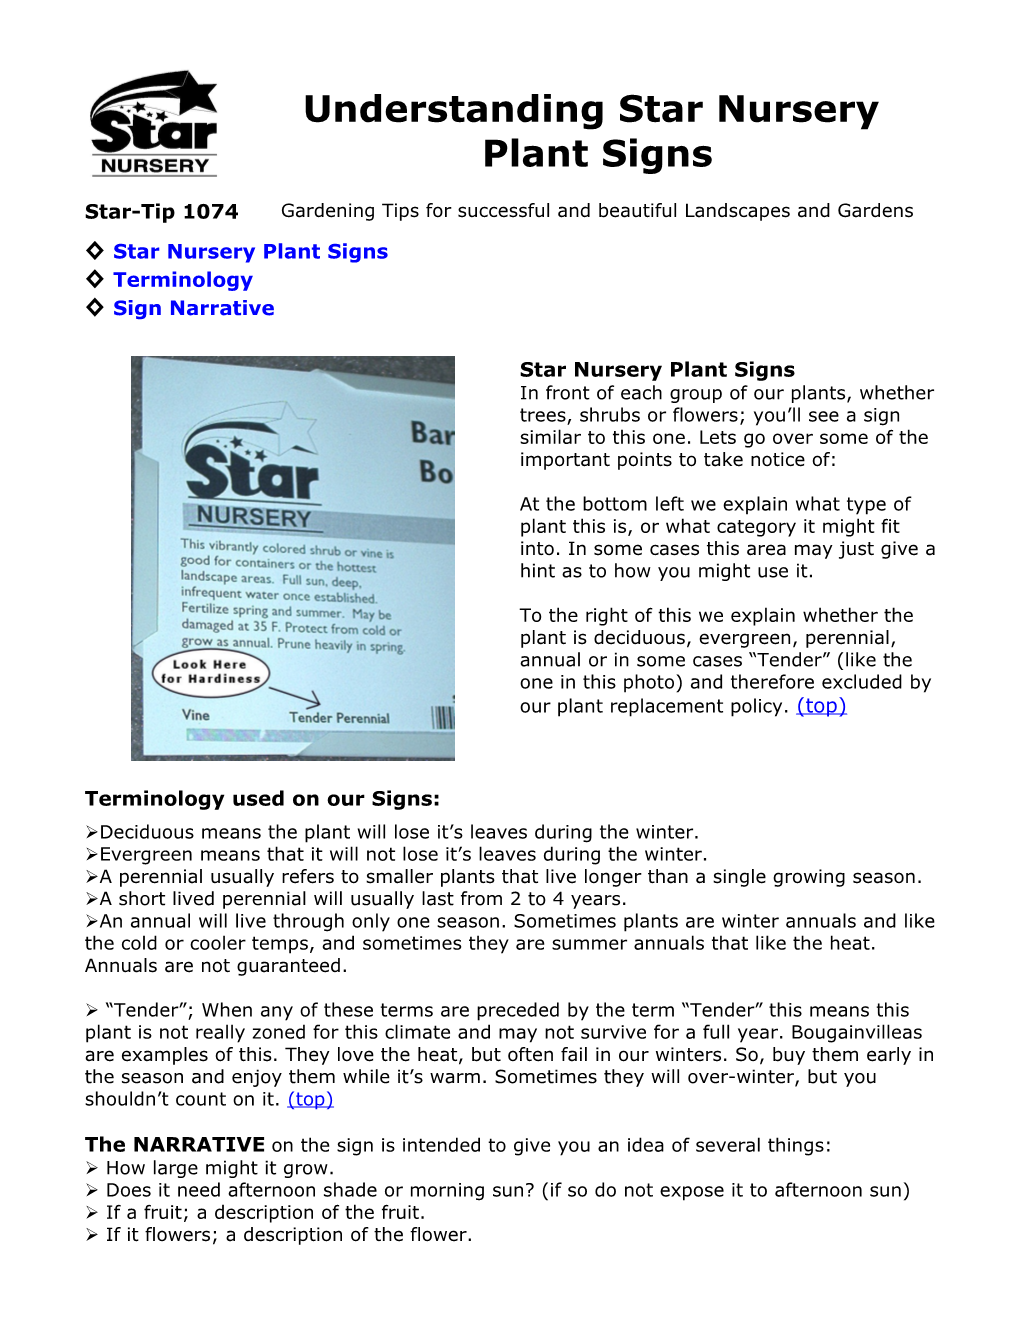 Understanding the Star Nursery Plant Signs